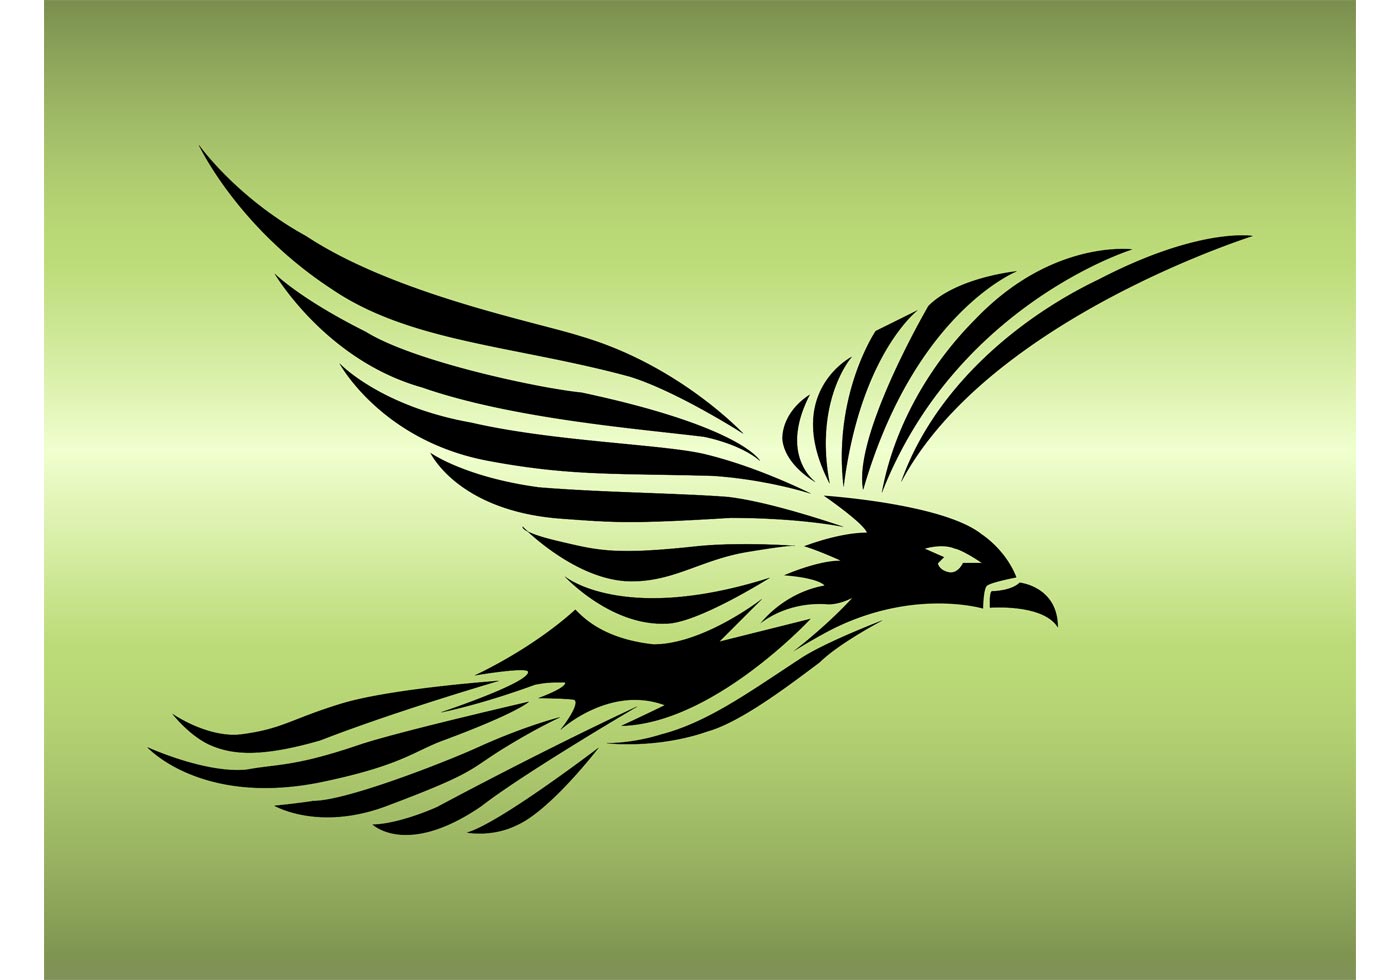  Eagle  Logo Vector  Download Free  Vector  Art Stock 